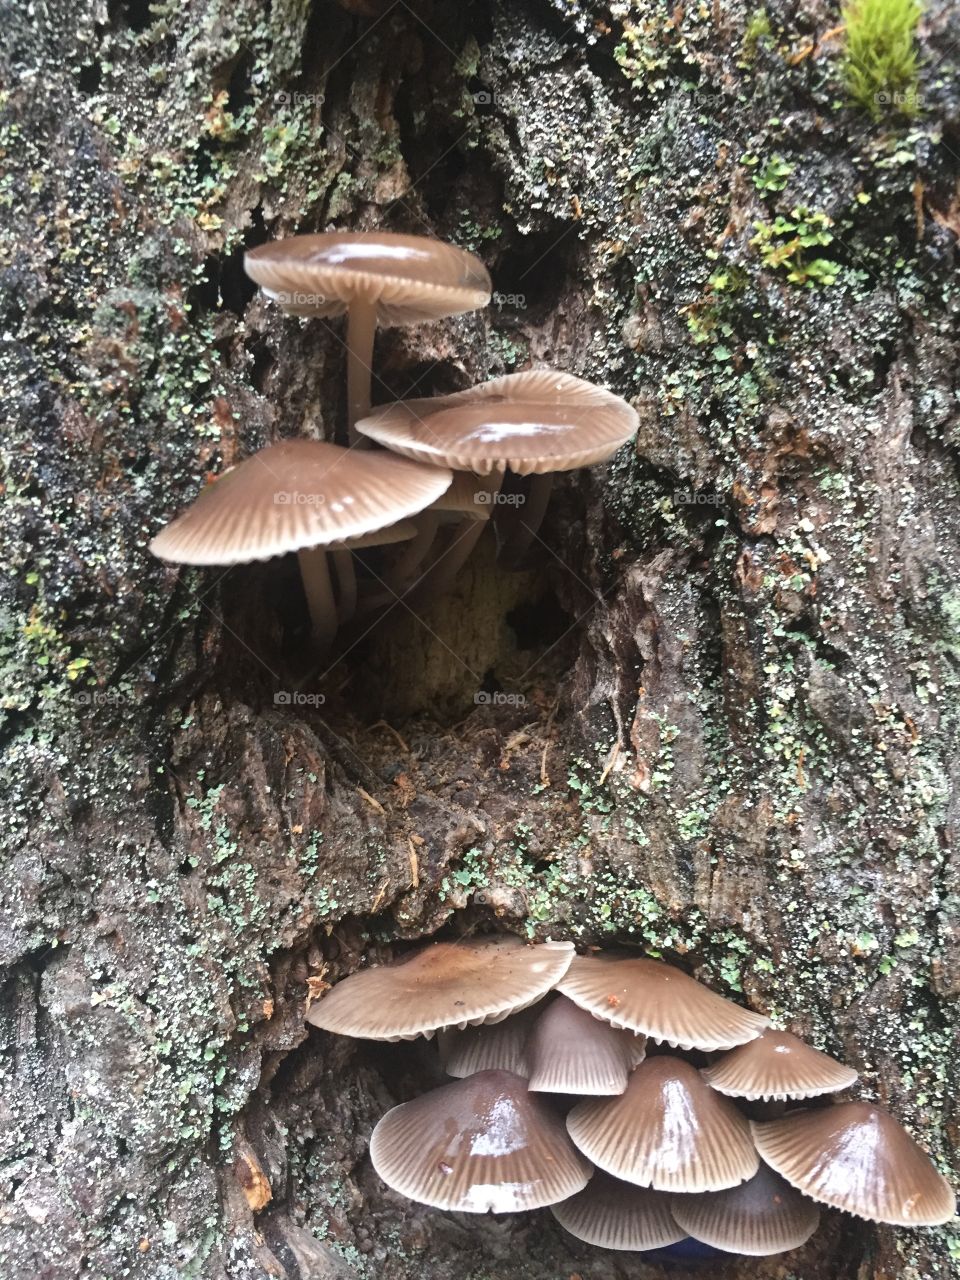 Mushrooms at Millersylvania State Park. November 2017. 